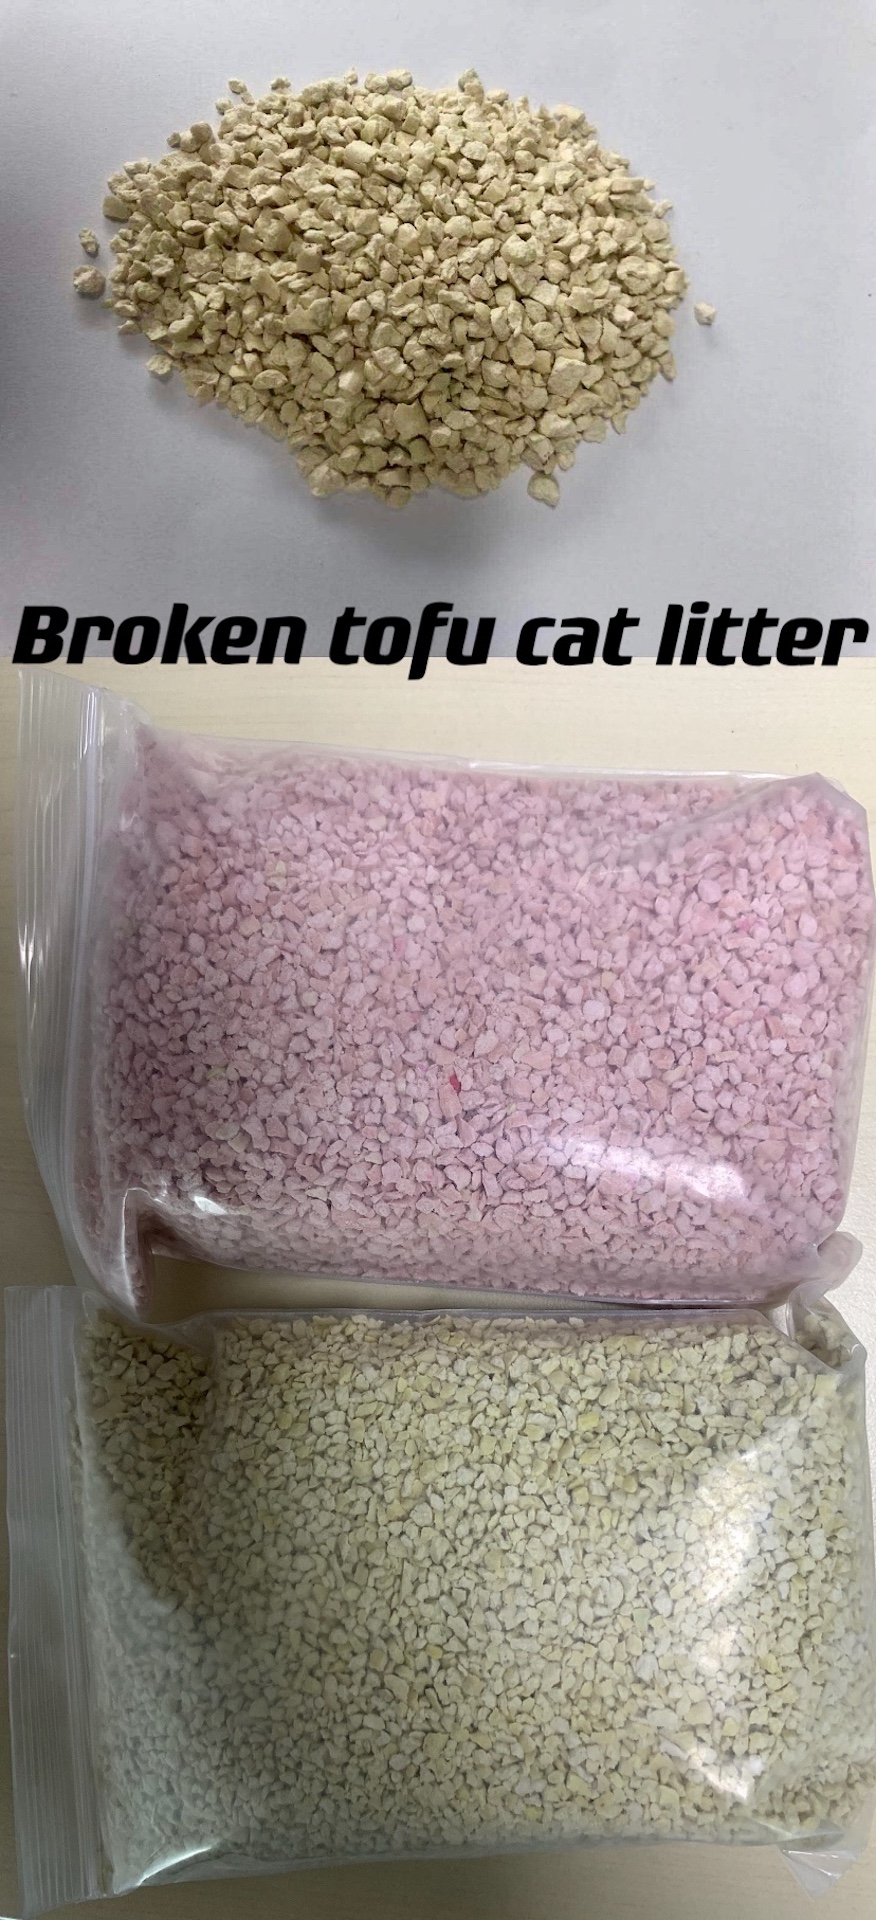 Corn Based Cat Litter, China Manufacturer,Supplier